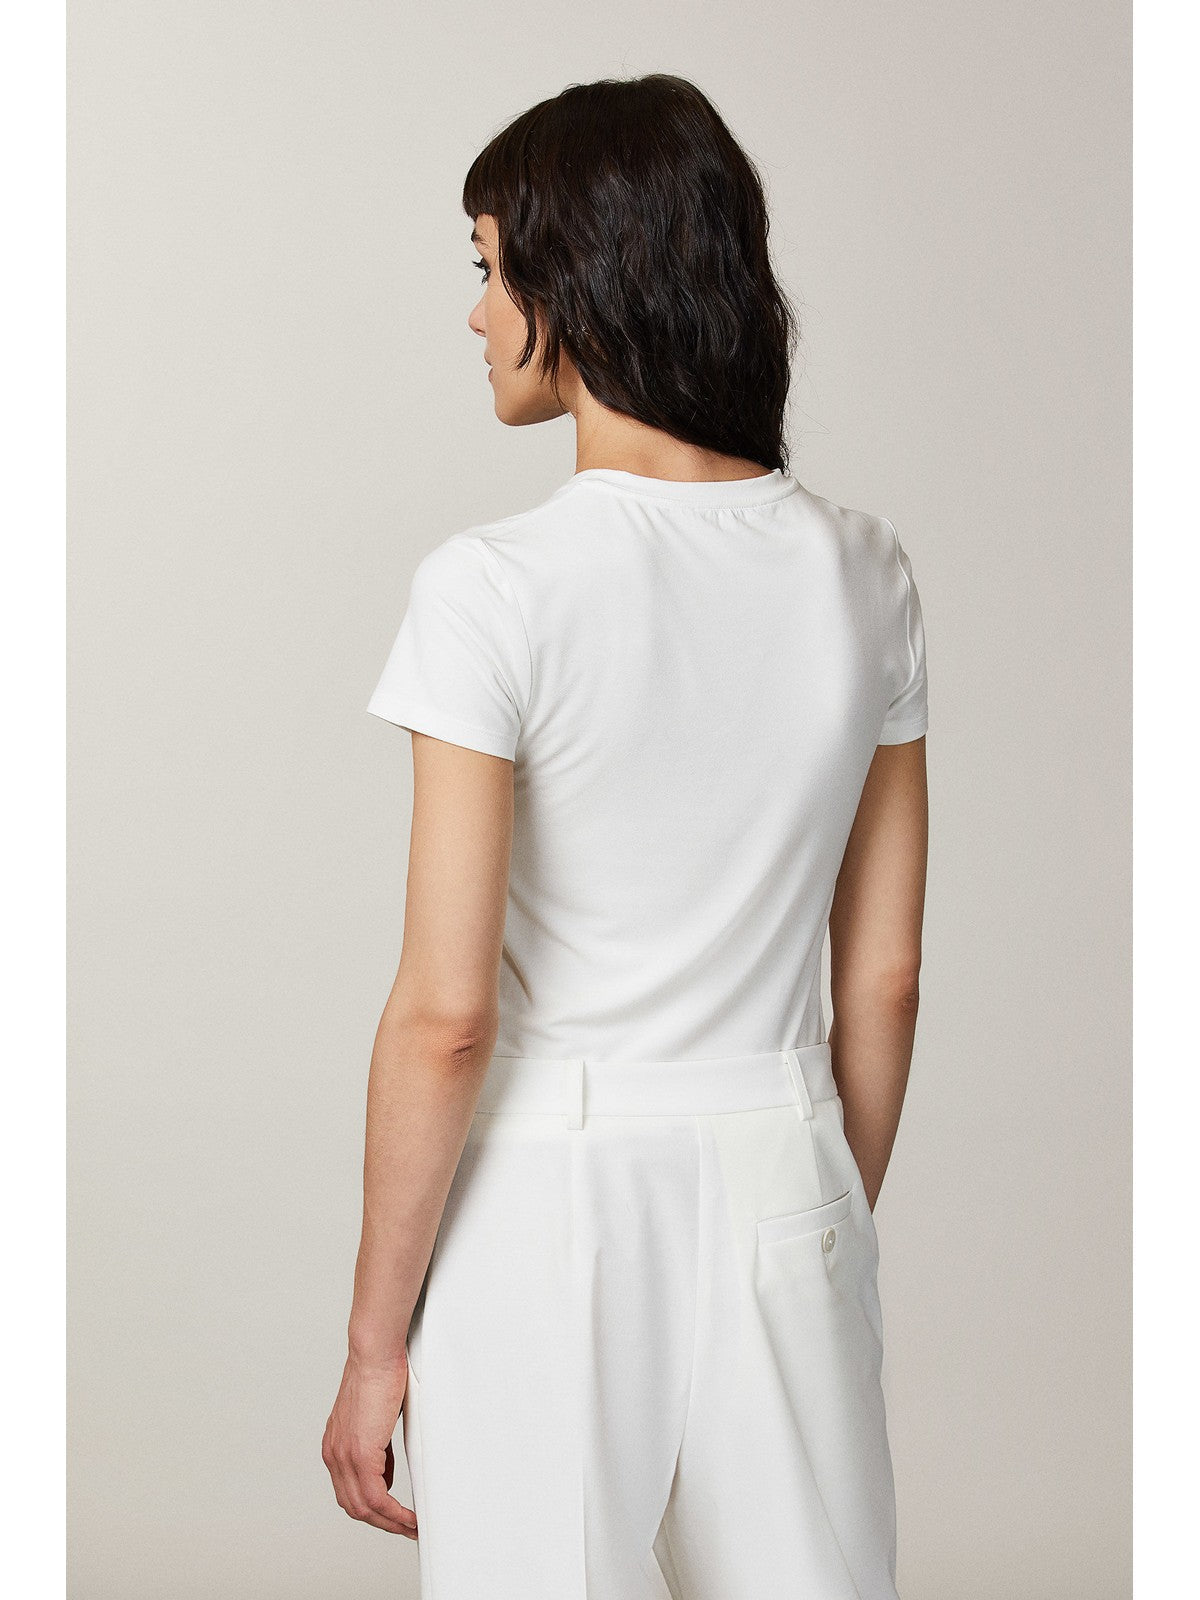 PATRIZIA PEPE T-Shirt e Polo Donna  CM1419 J013 W146 Bianco